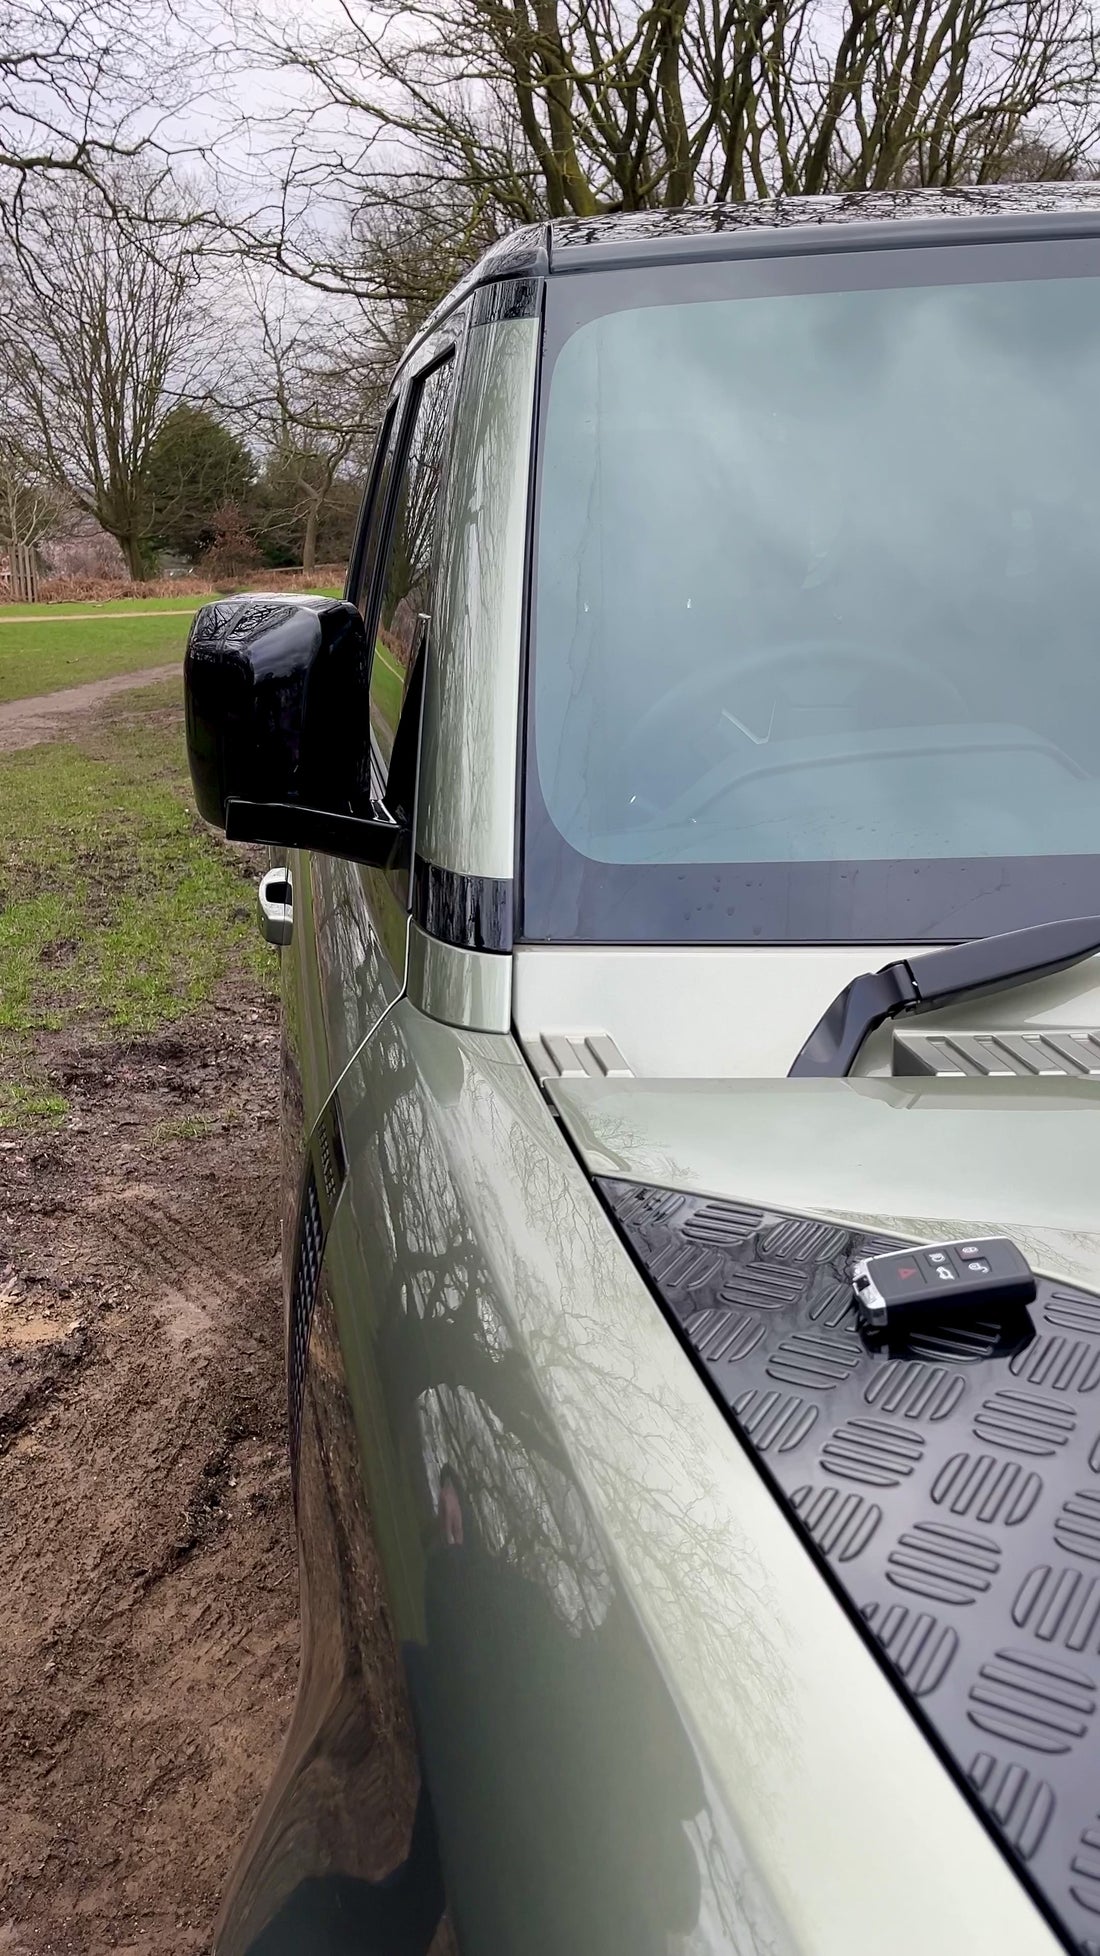 Land Rover Defender key lock & unlocked, using KEYSHIELD anti-theft security sleeve